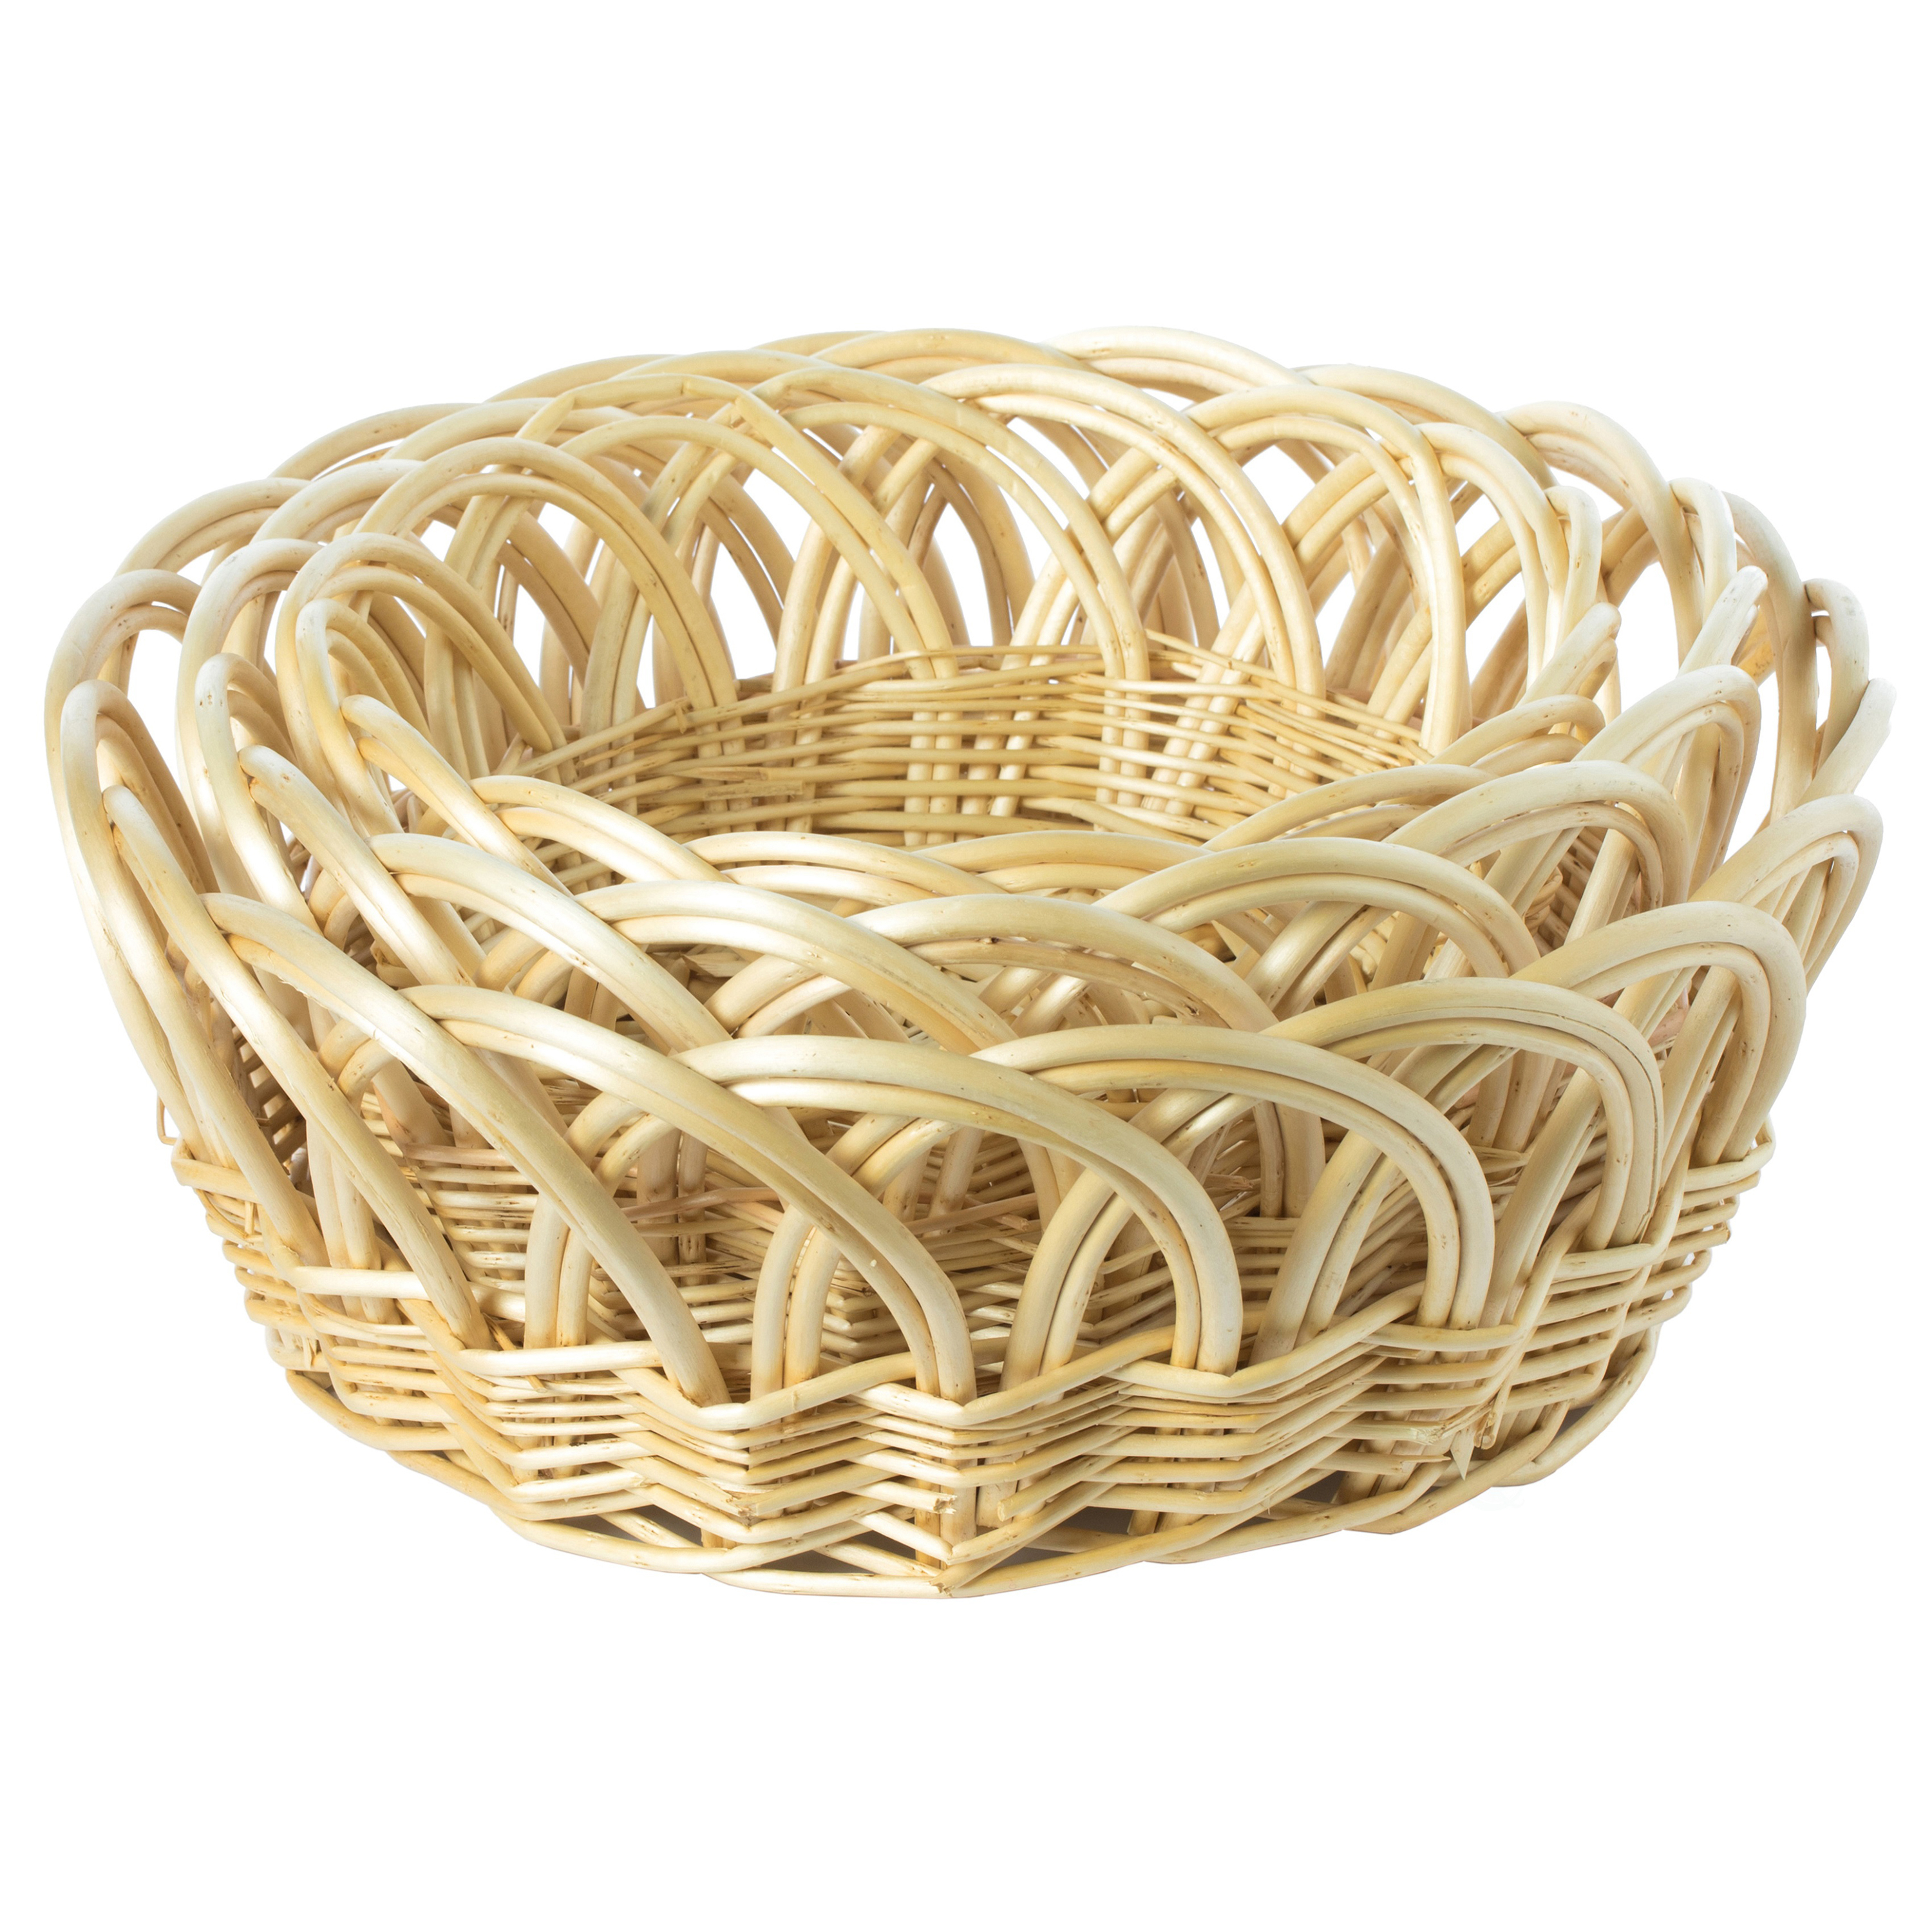 Decorative Round Fruit Bowl Bread Basket Serving Tray - Large